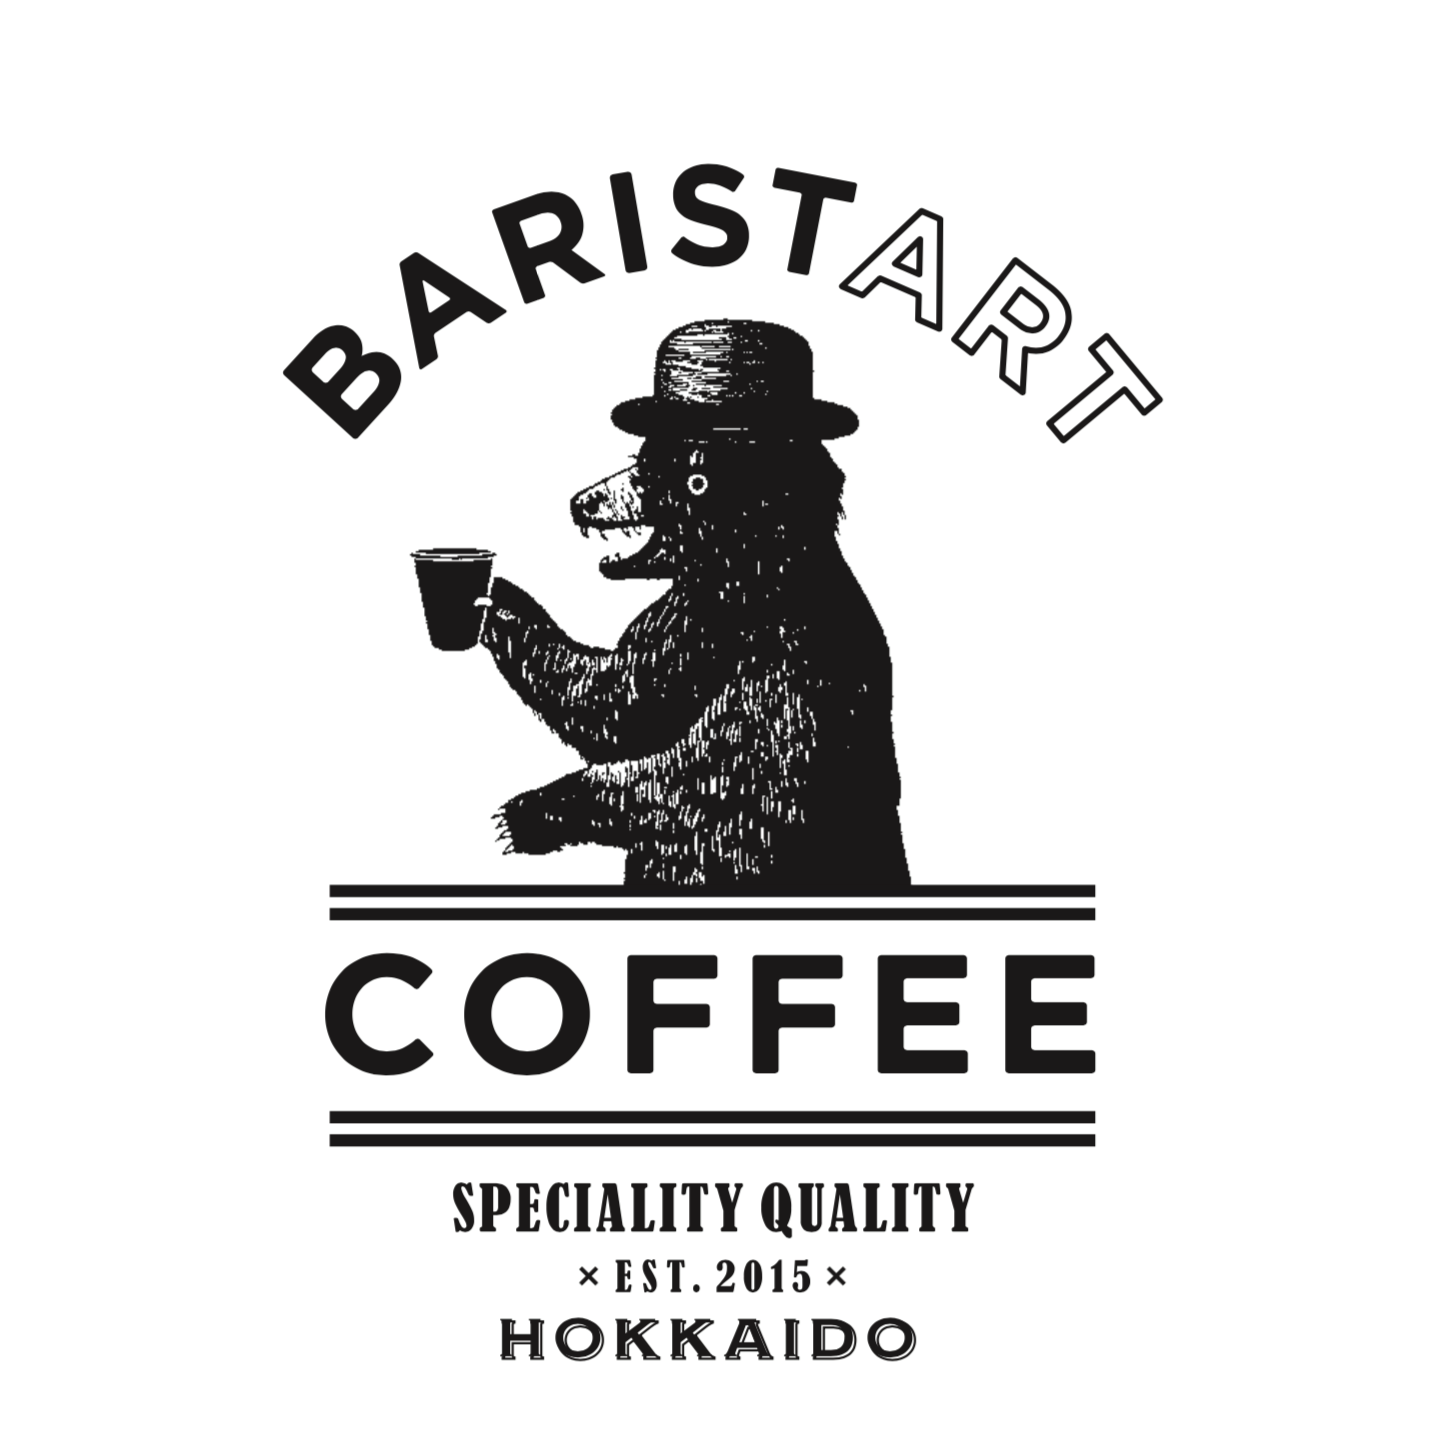 Baristart Coffee